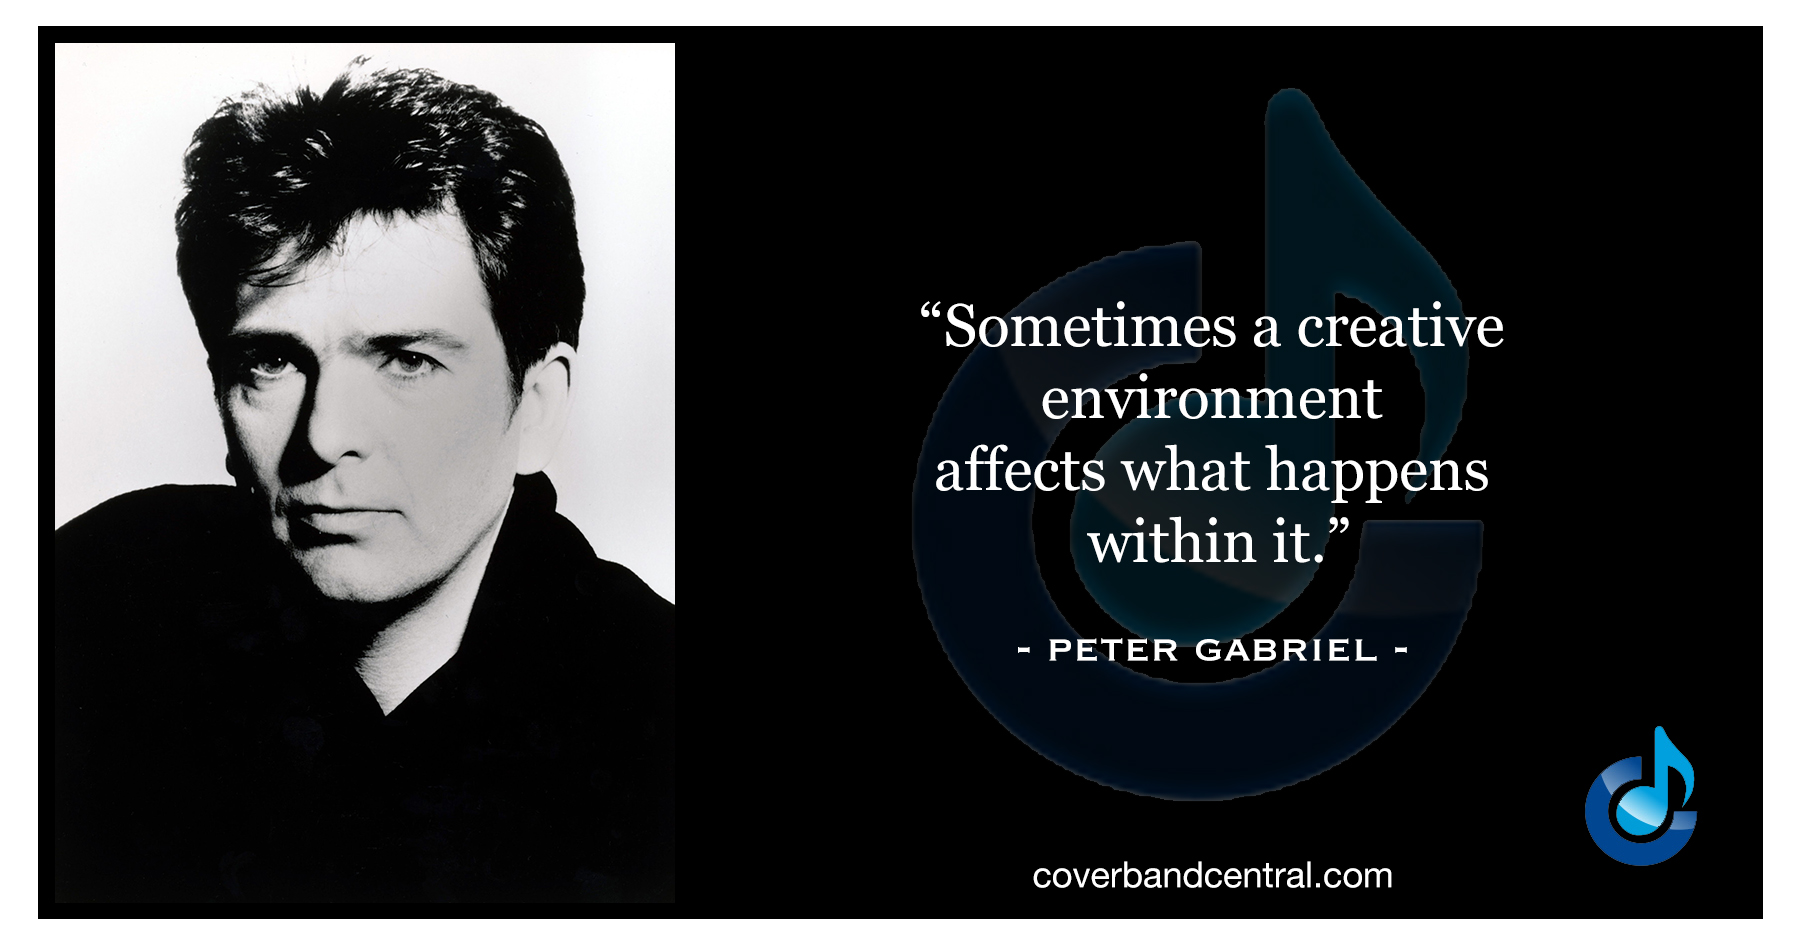 Peter Gabriel quote